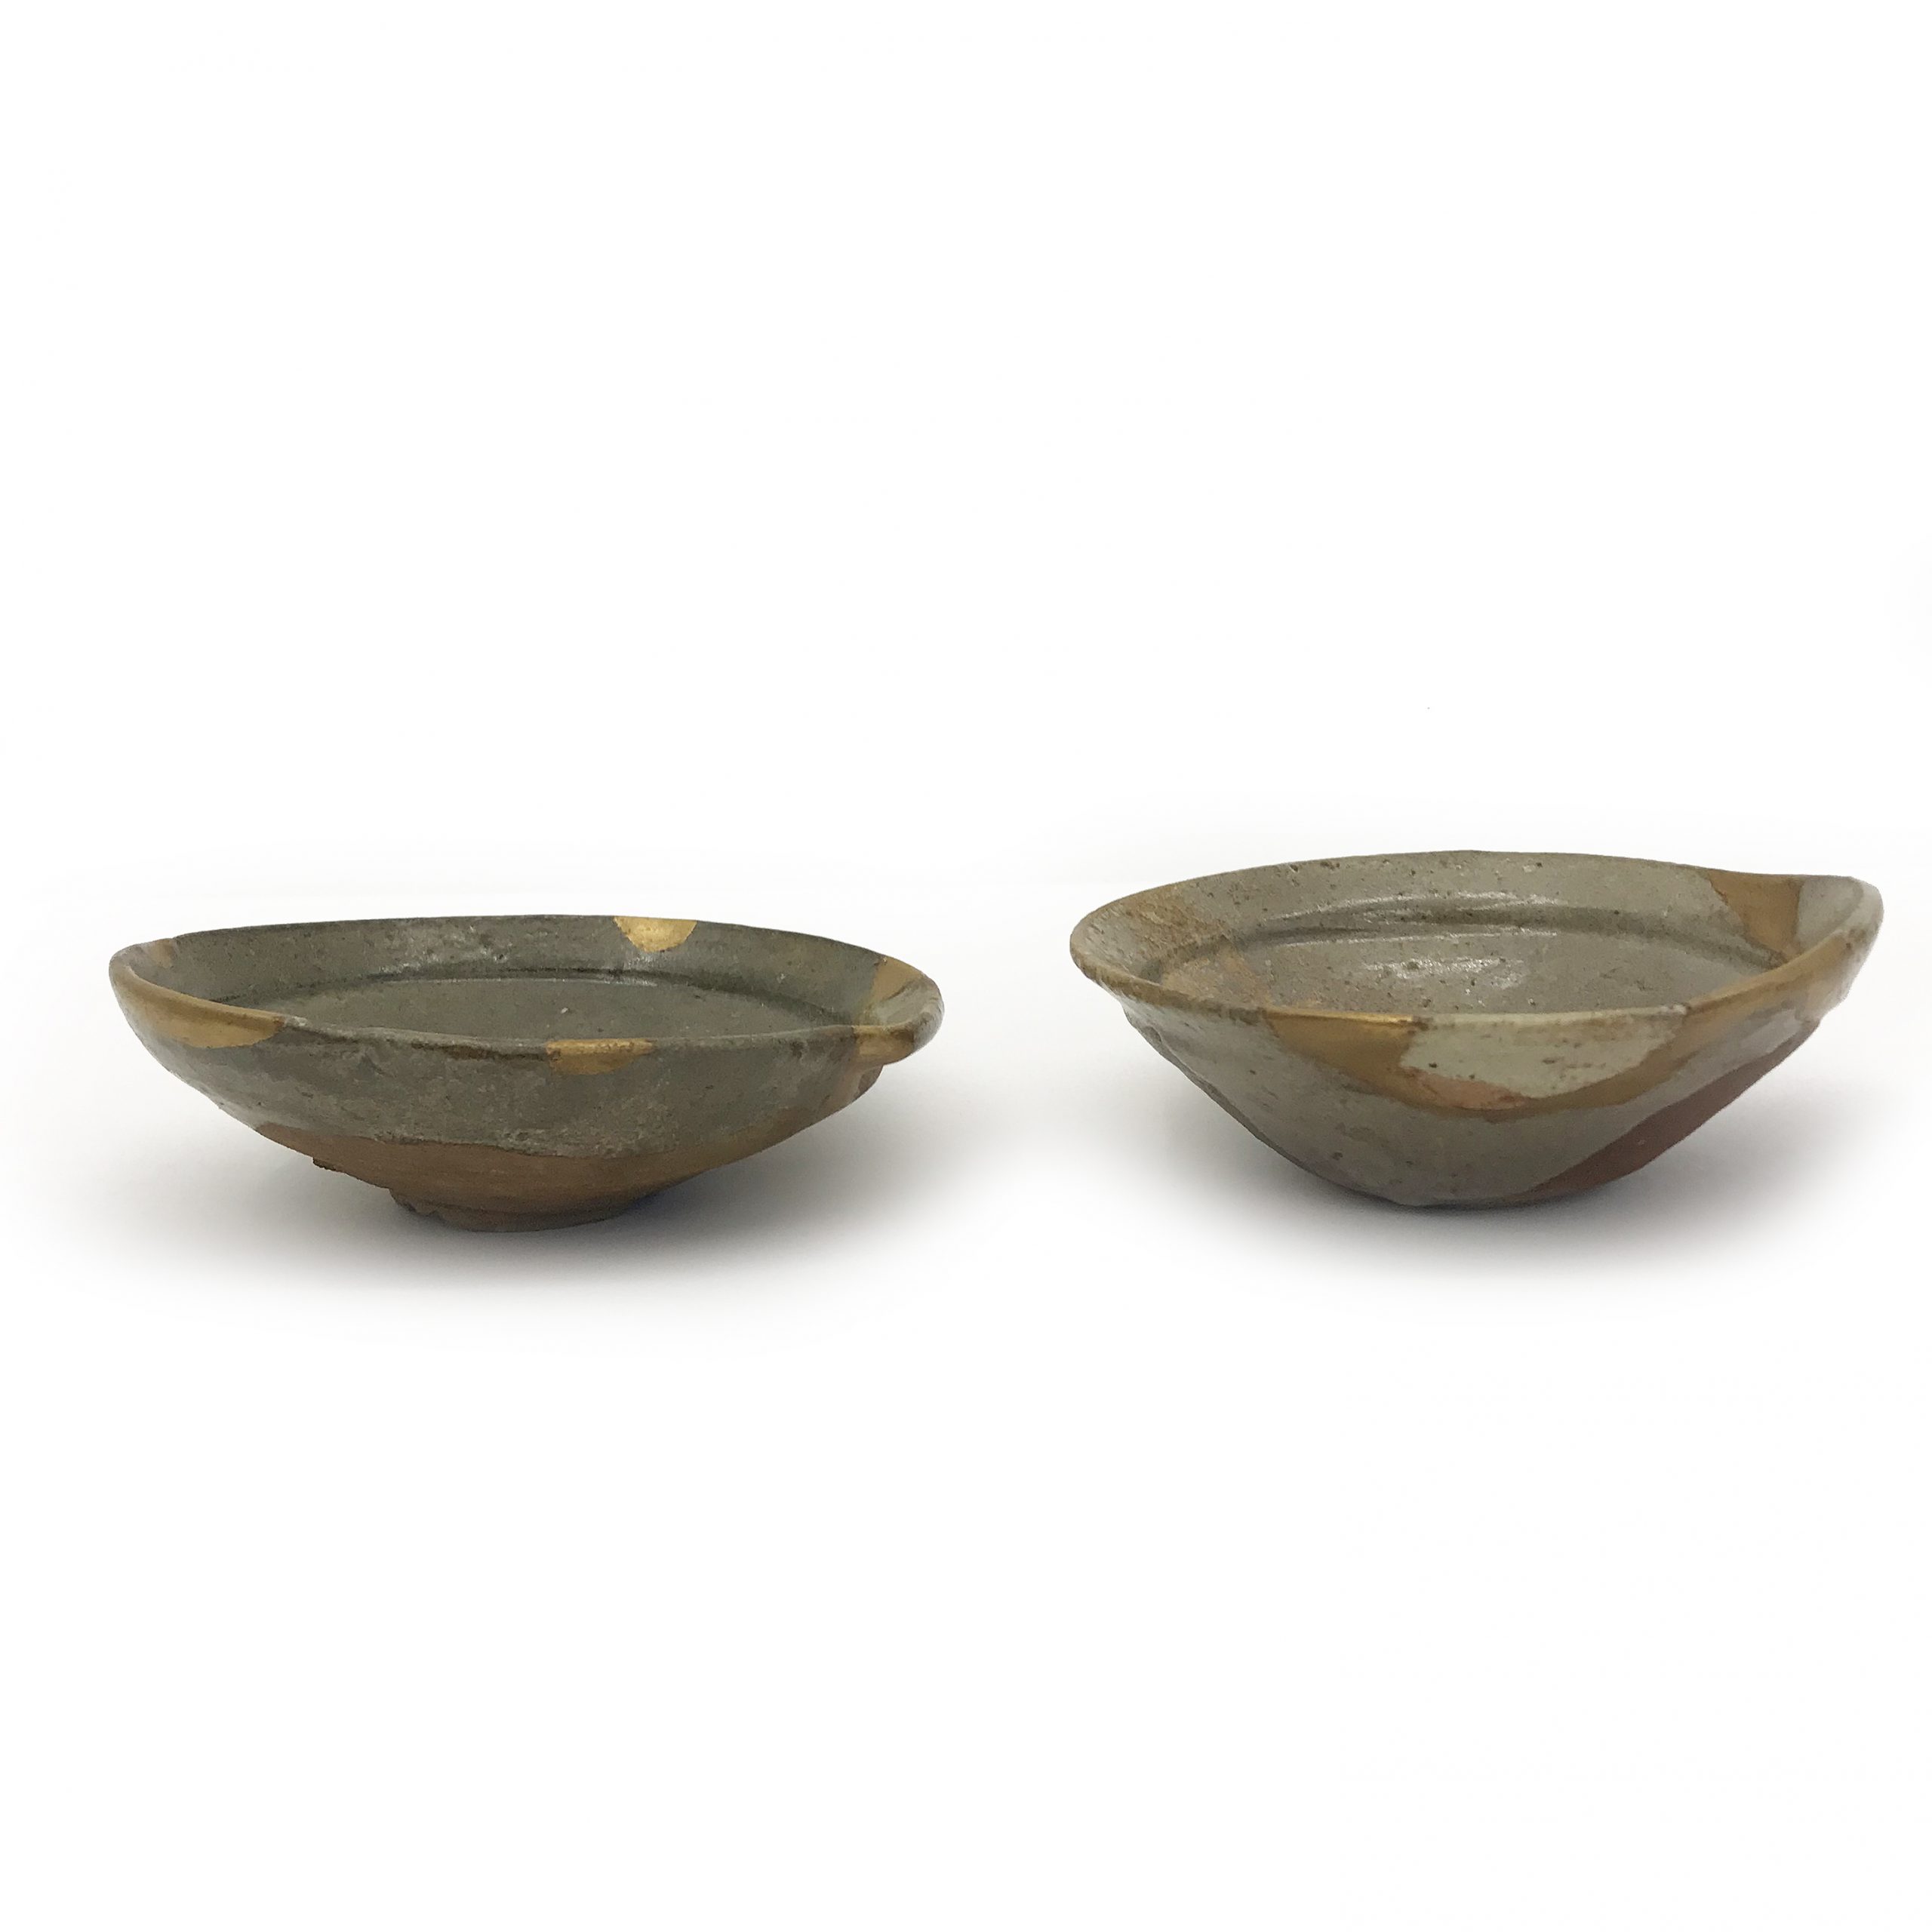 Two bowls with golden Kintsugi repair | ceramic | Korea | Joseon Dynasty | basedonart gallery